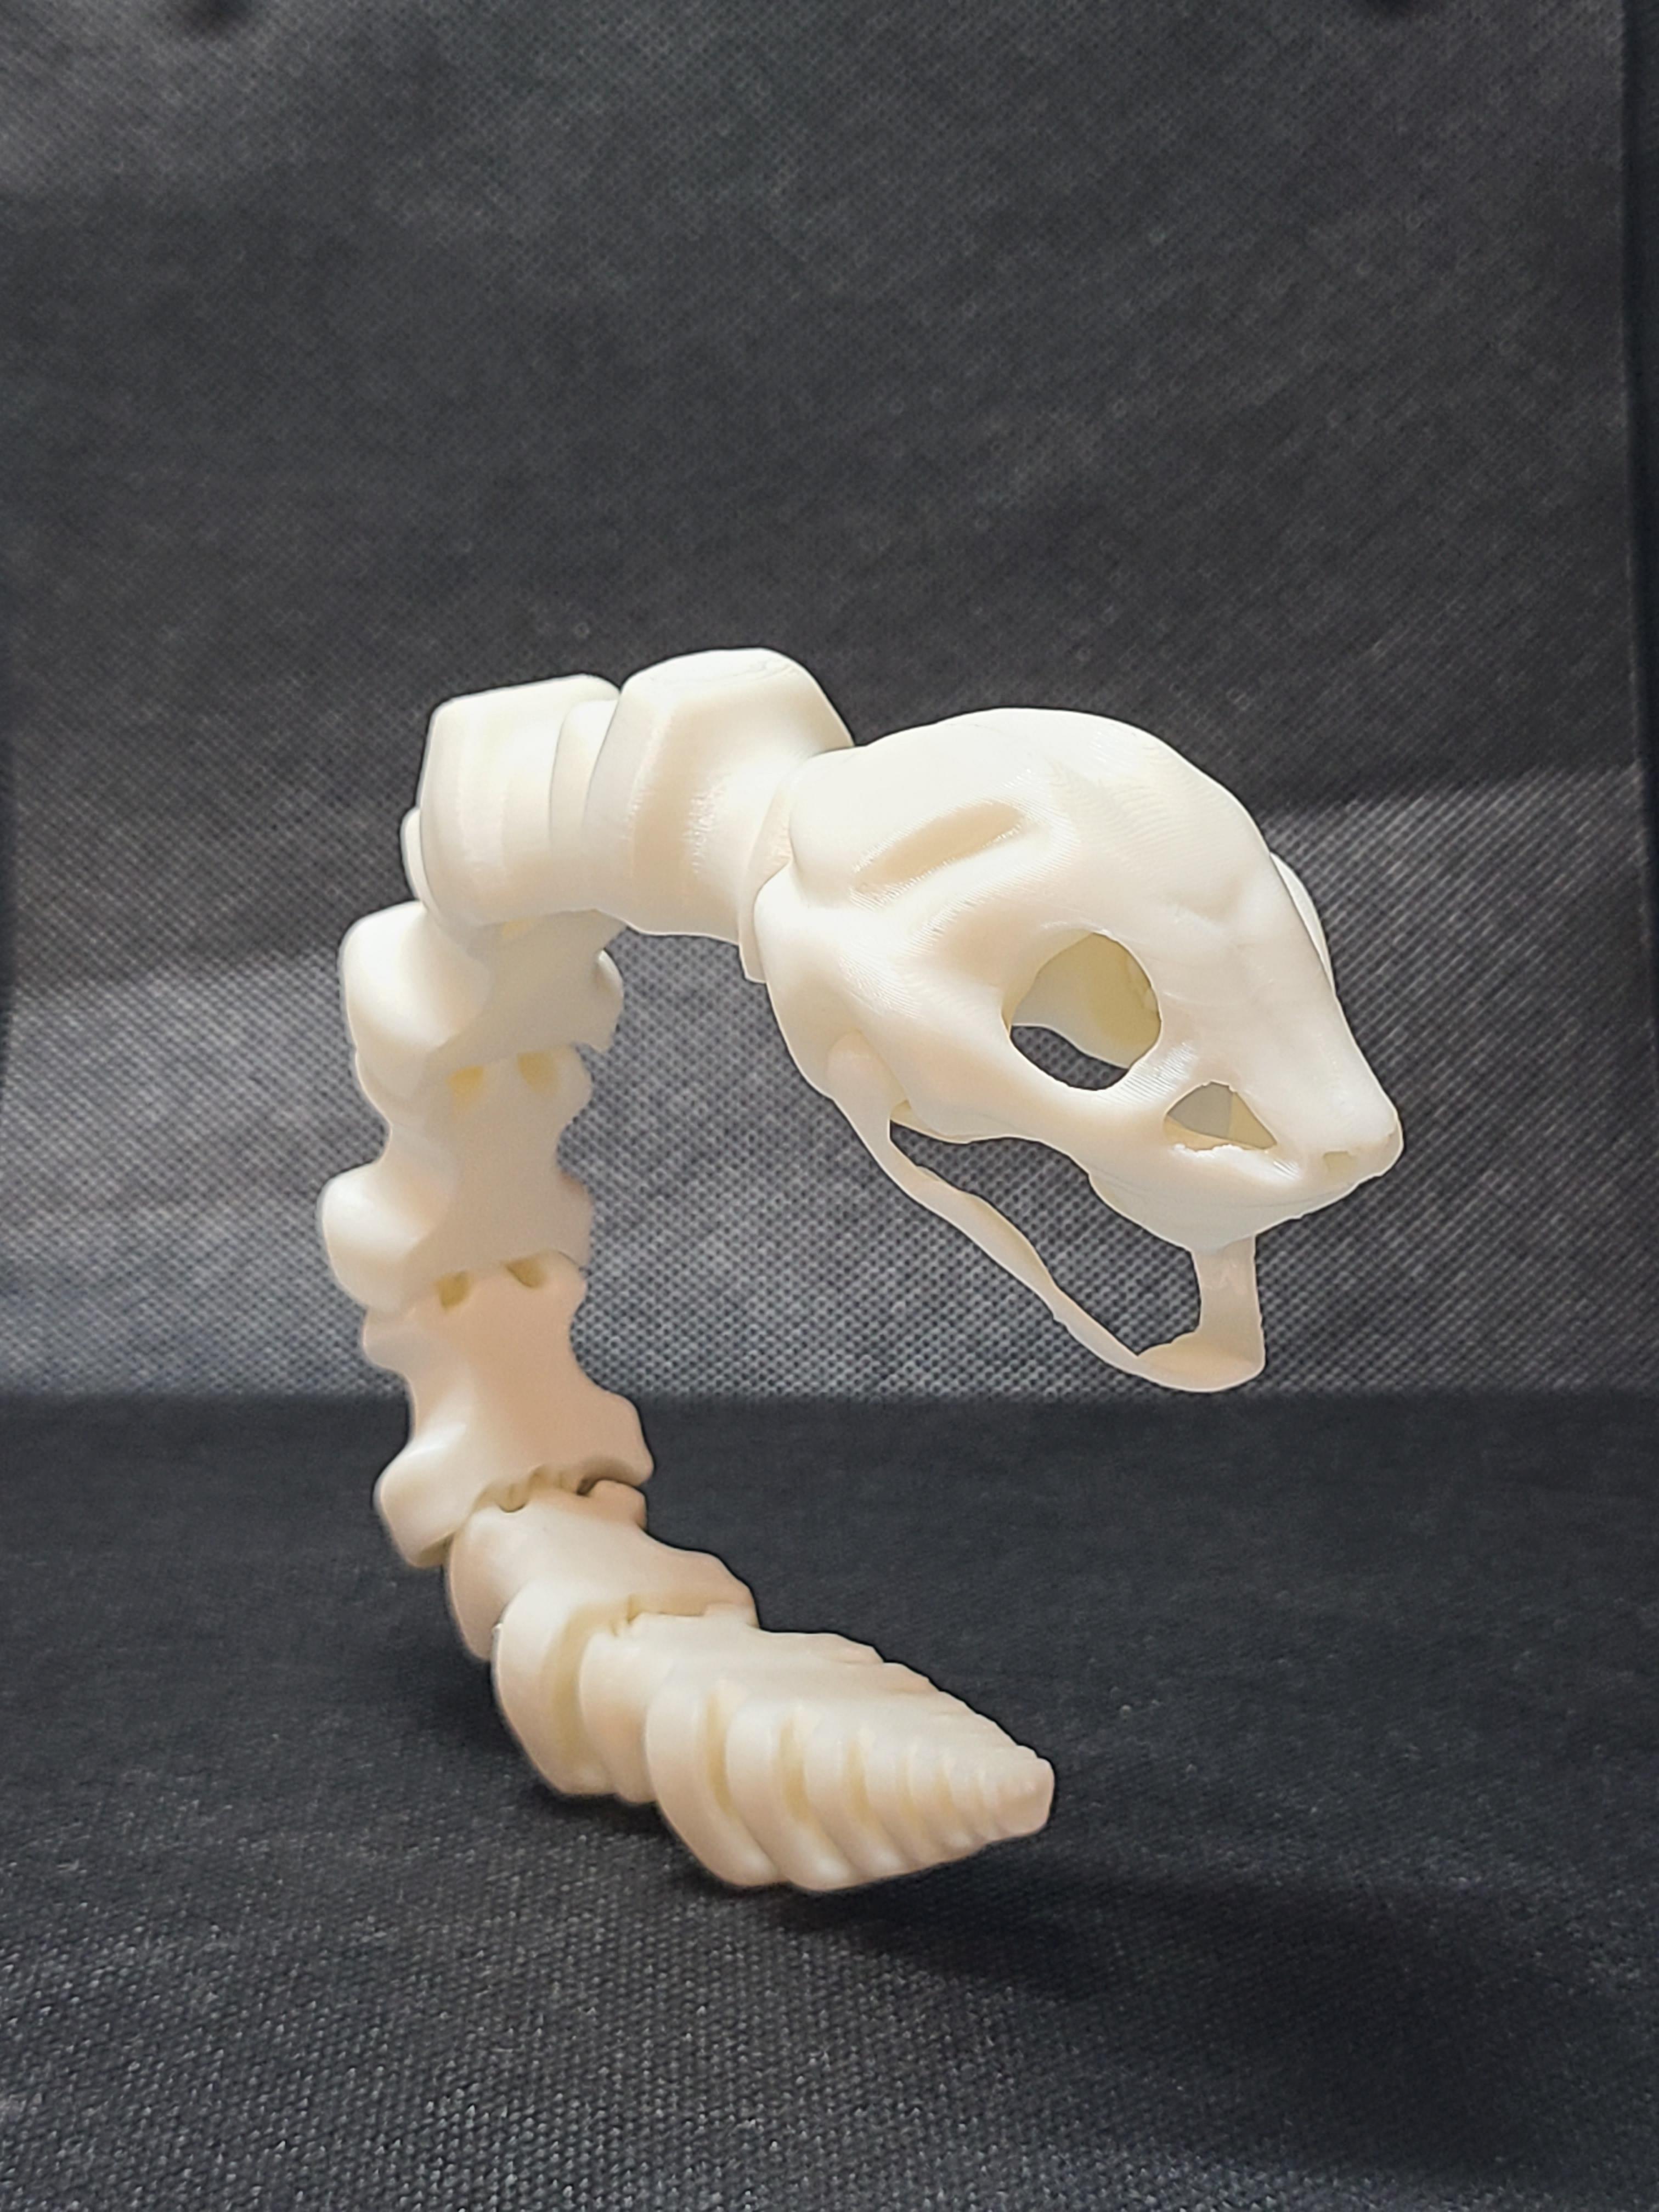 Sleek-Eyed Bone Snake (Tight) - Articulated Snap-Flex Fidget  3d model